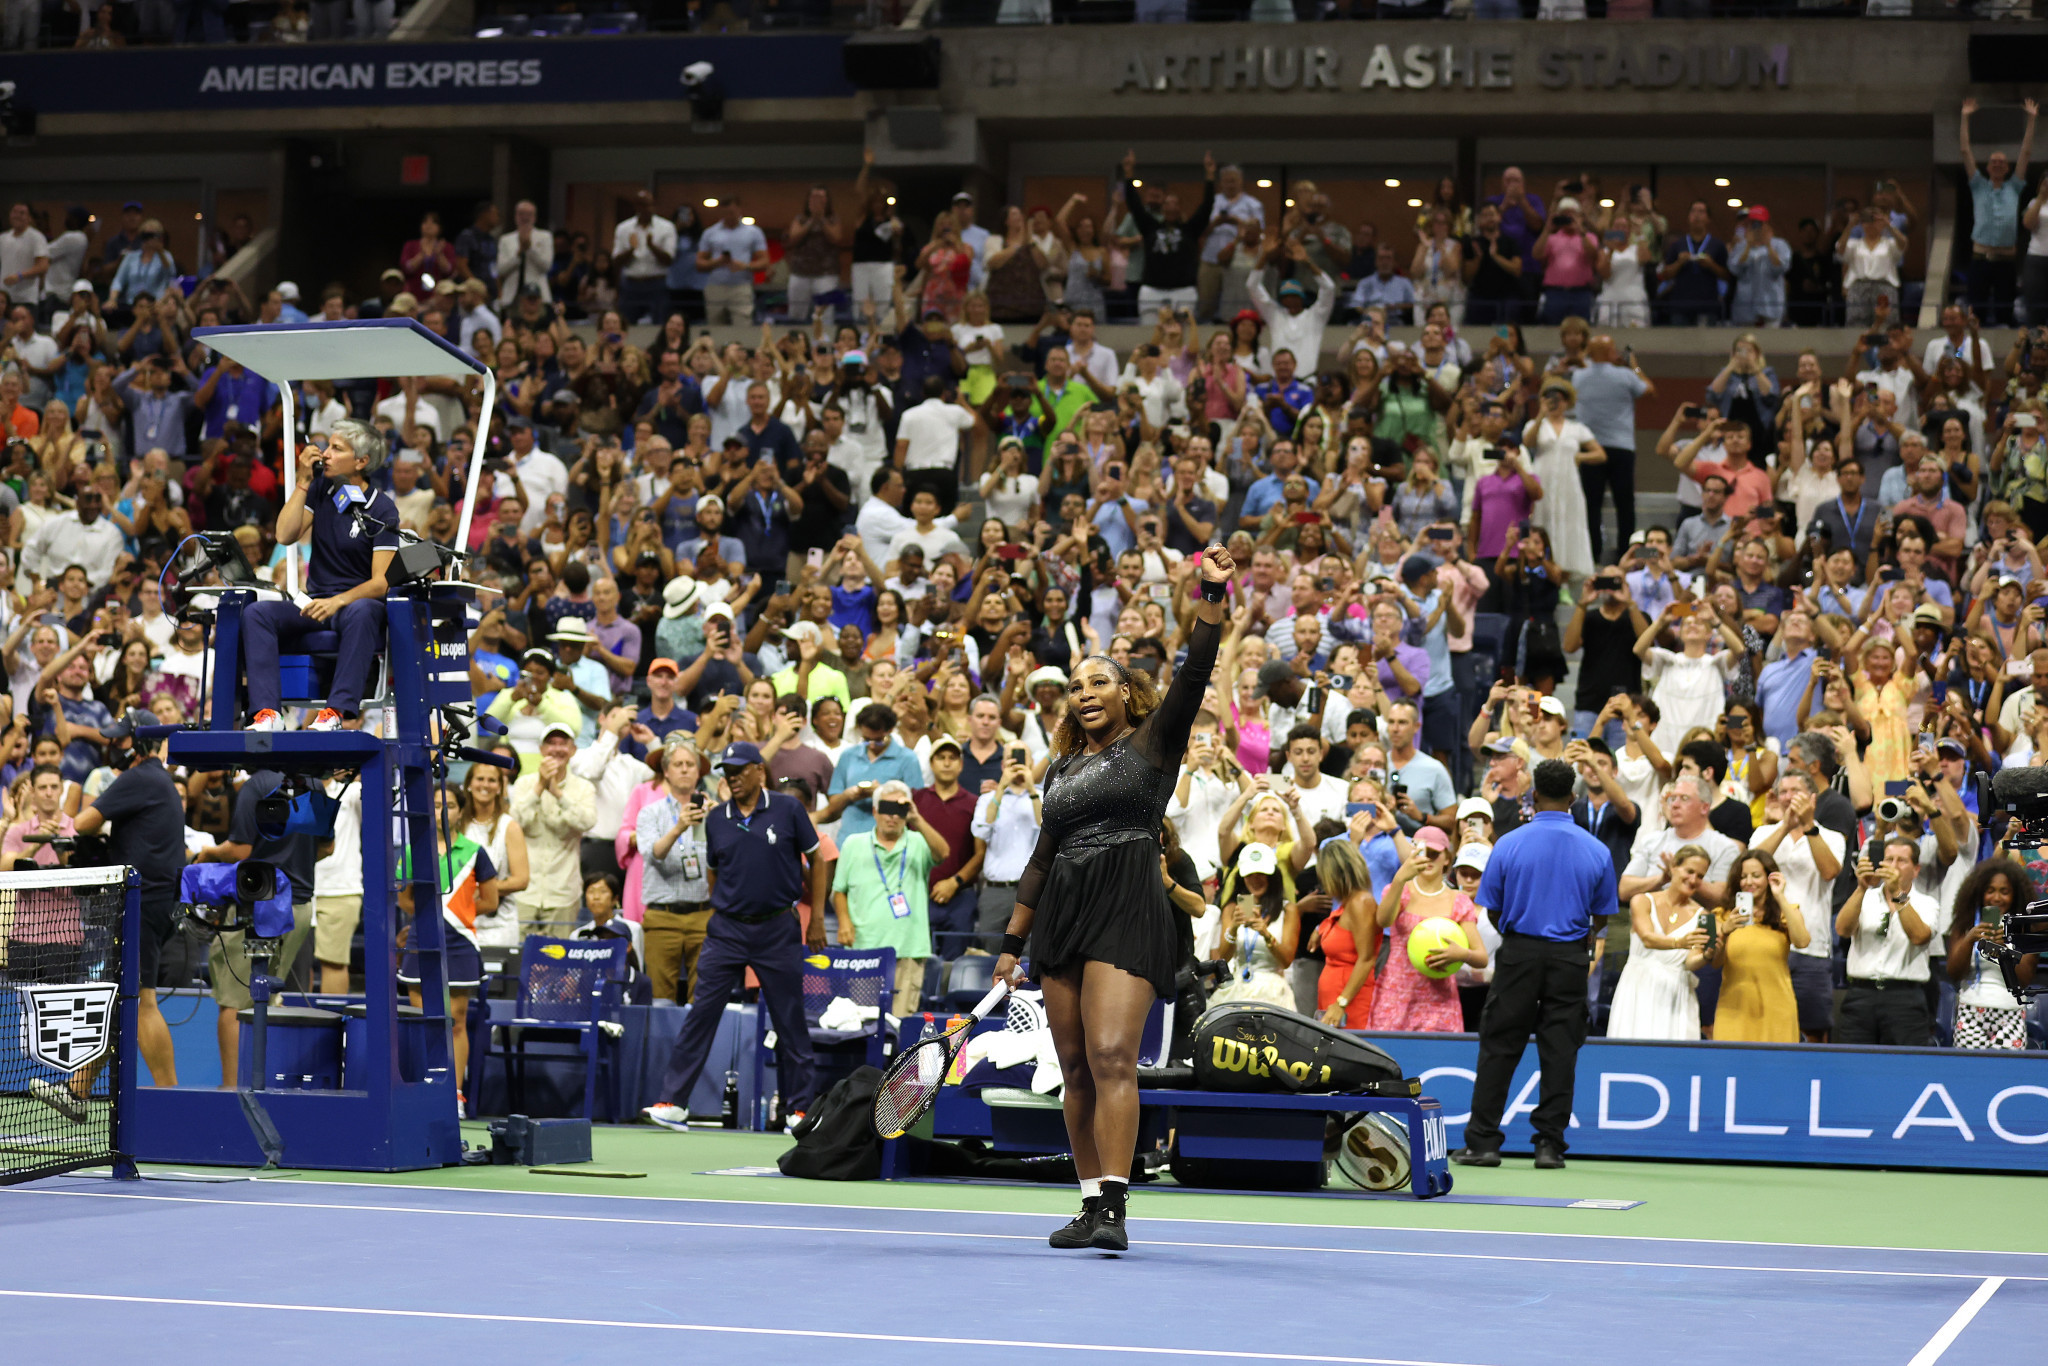 US Open tennis attendance record broken during Serena Williams first-round match